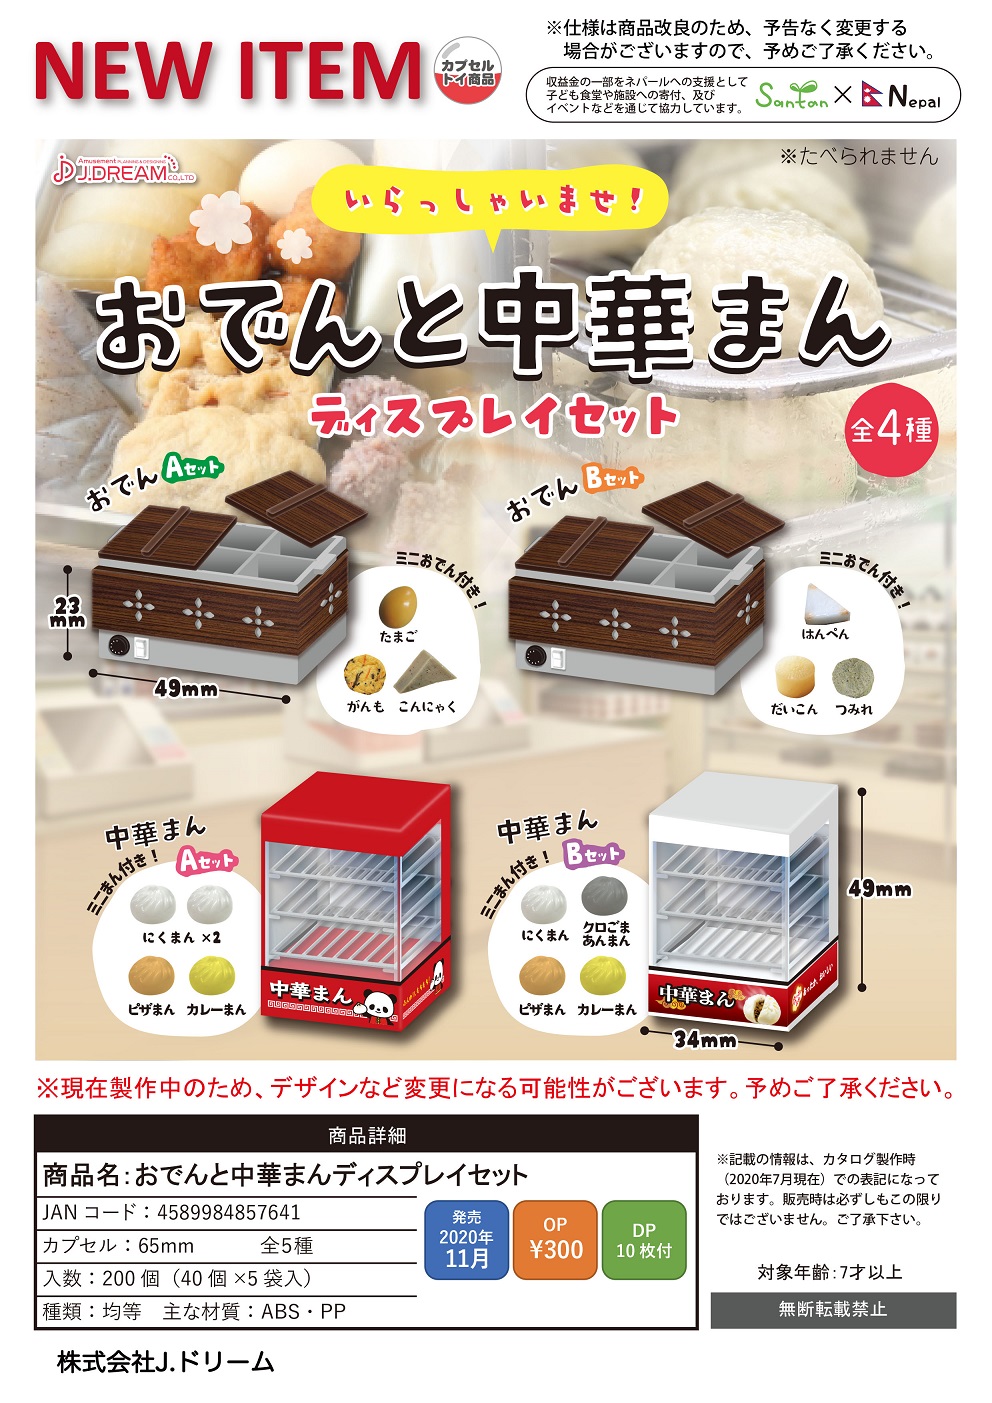 【B】300日元扭蛋 场景摆件 关东煮&包子 全5种 (1袋40个) 857641